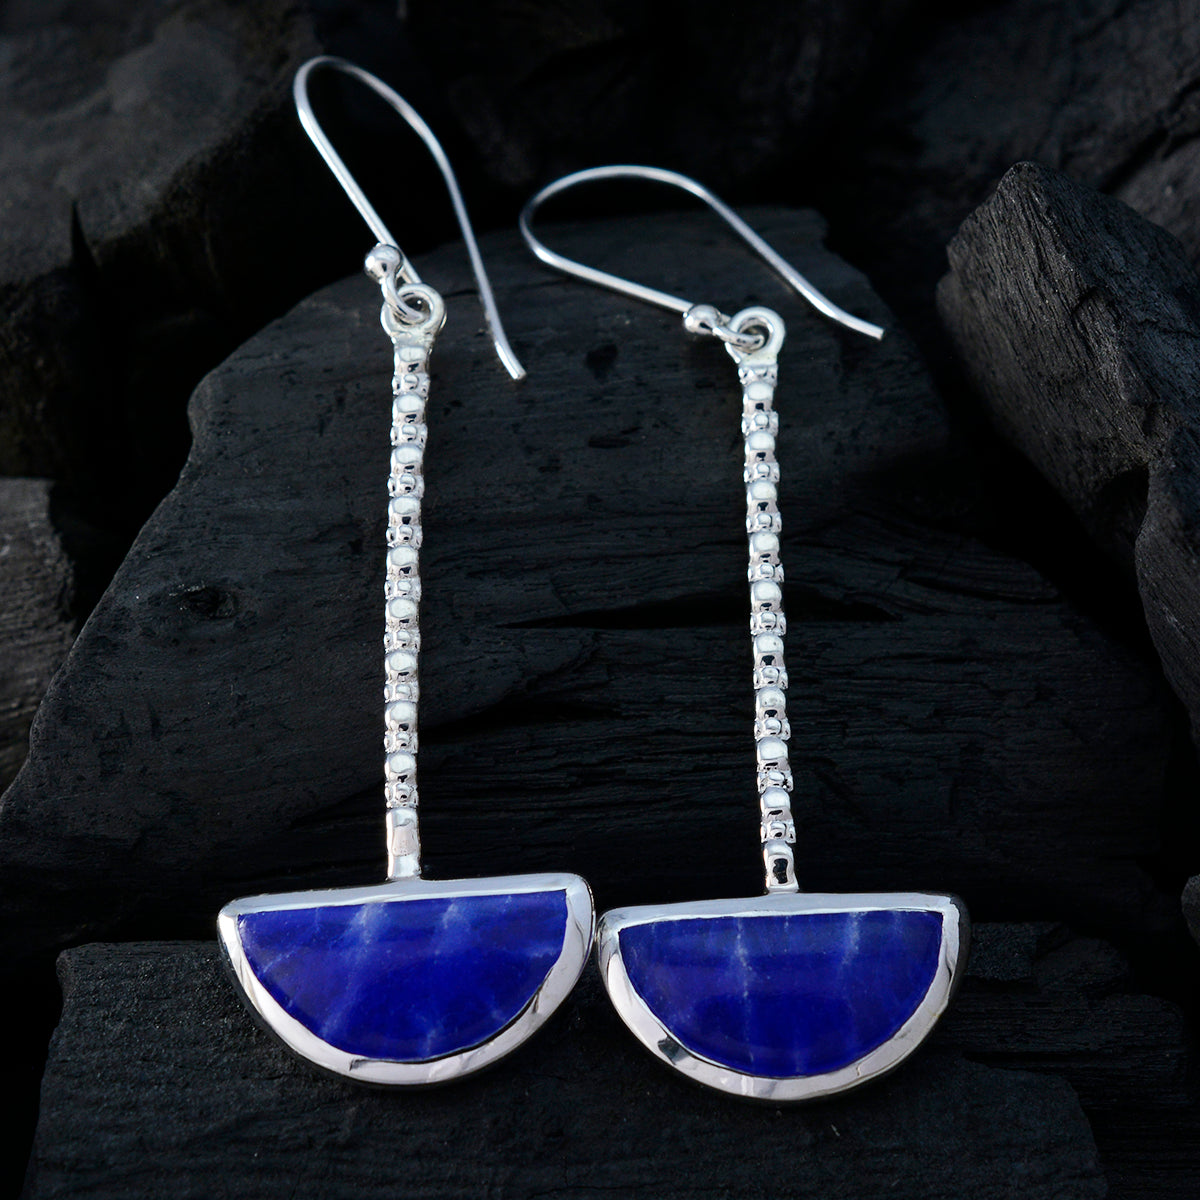 Riyo Nice Gemstone fancy Cabochon Nevy Blue Indian Shappire Silver Earrings halloween gift